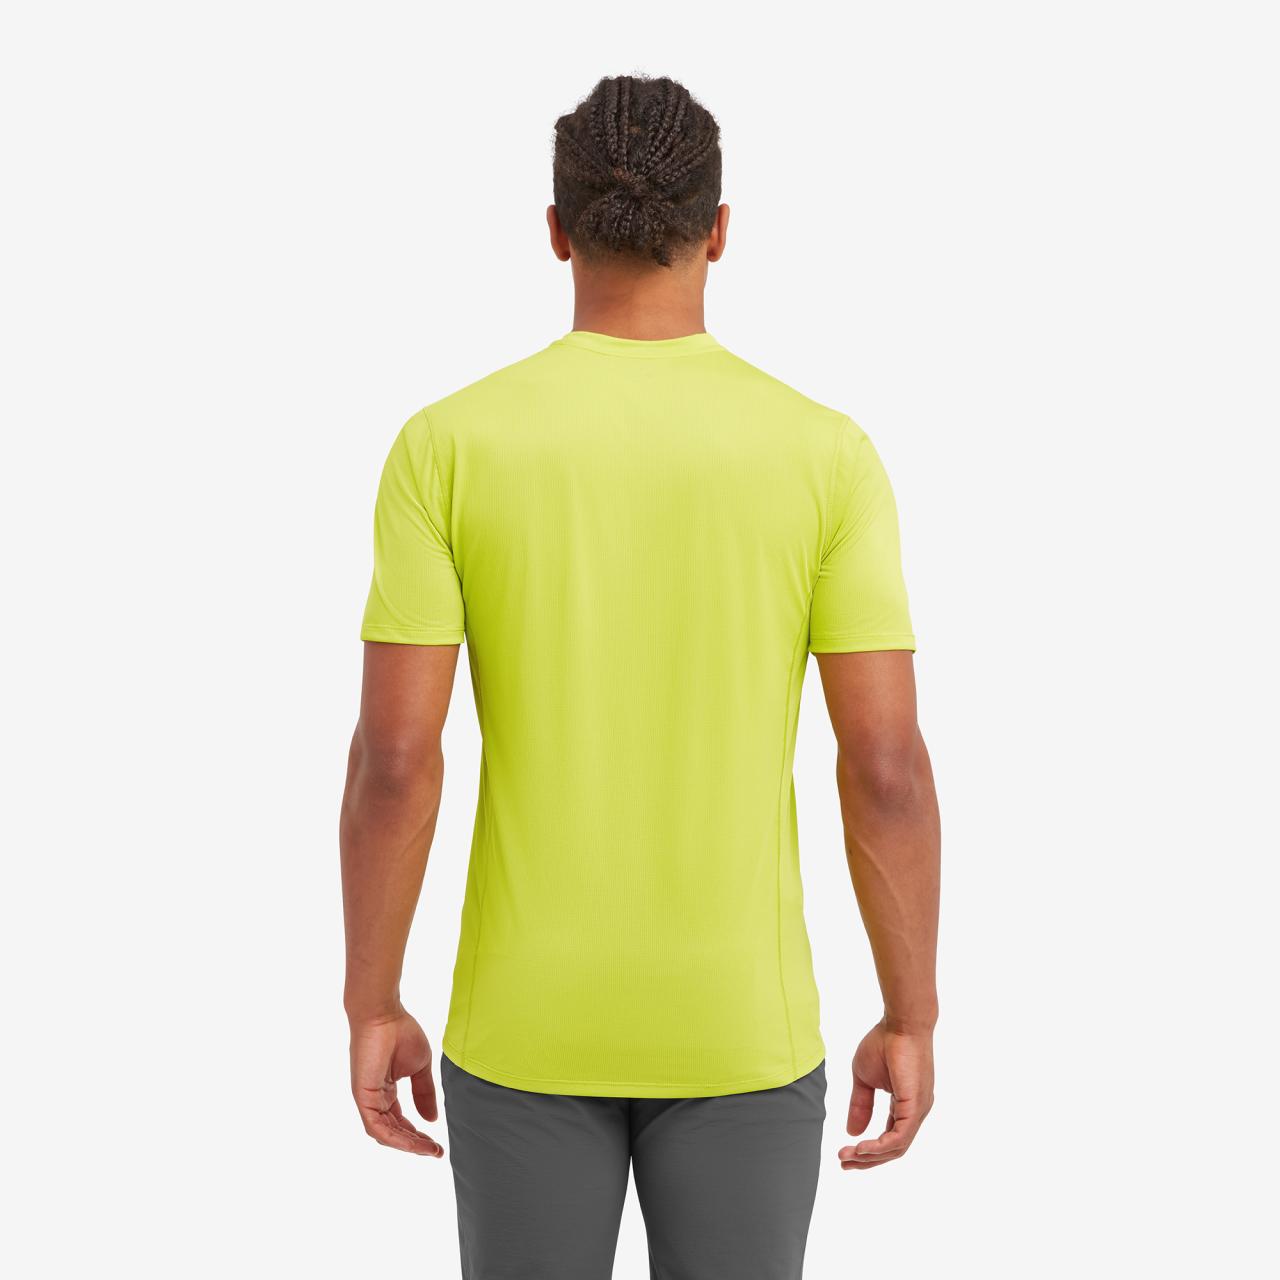 DART LITE T-SHIRT-CITRUS SPRING-XS pánské tričko žlutozelené